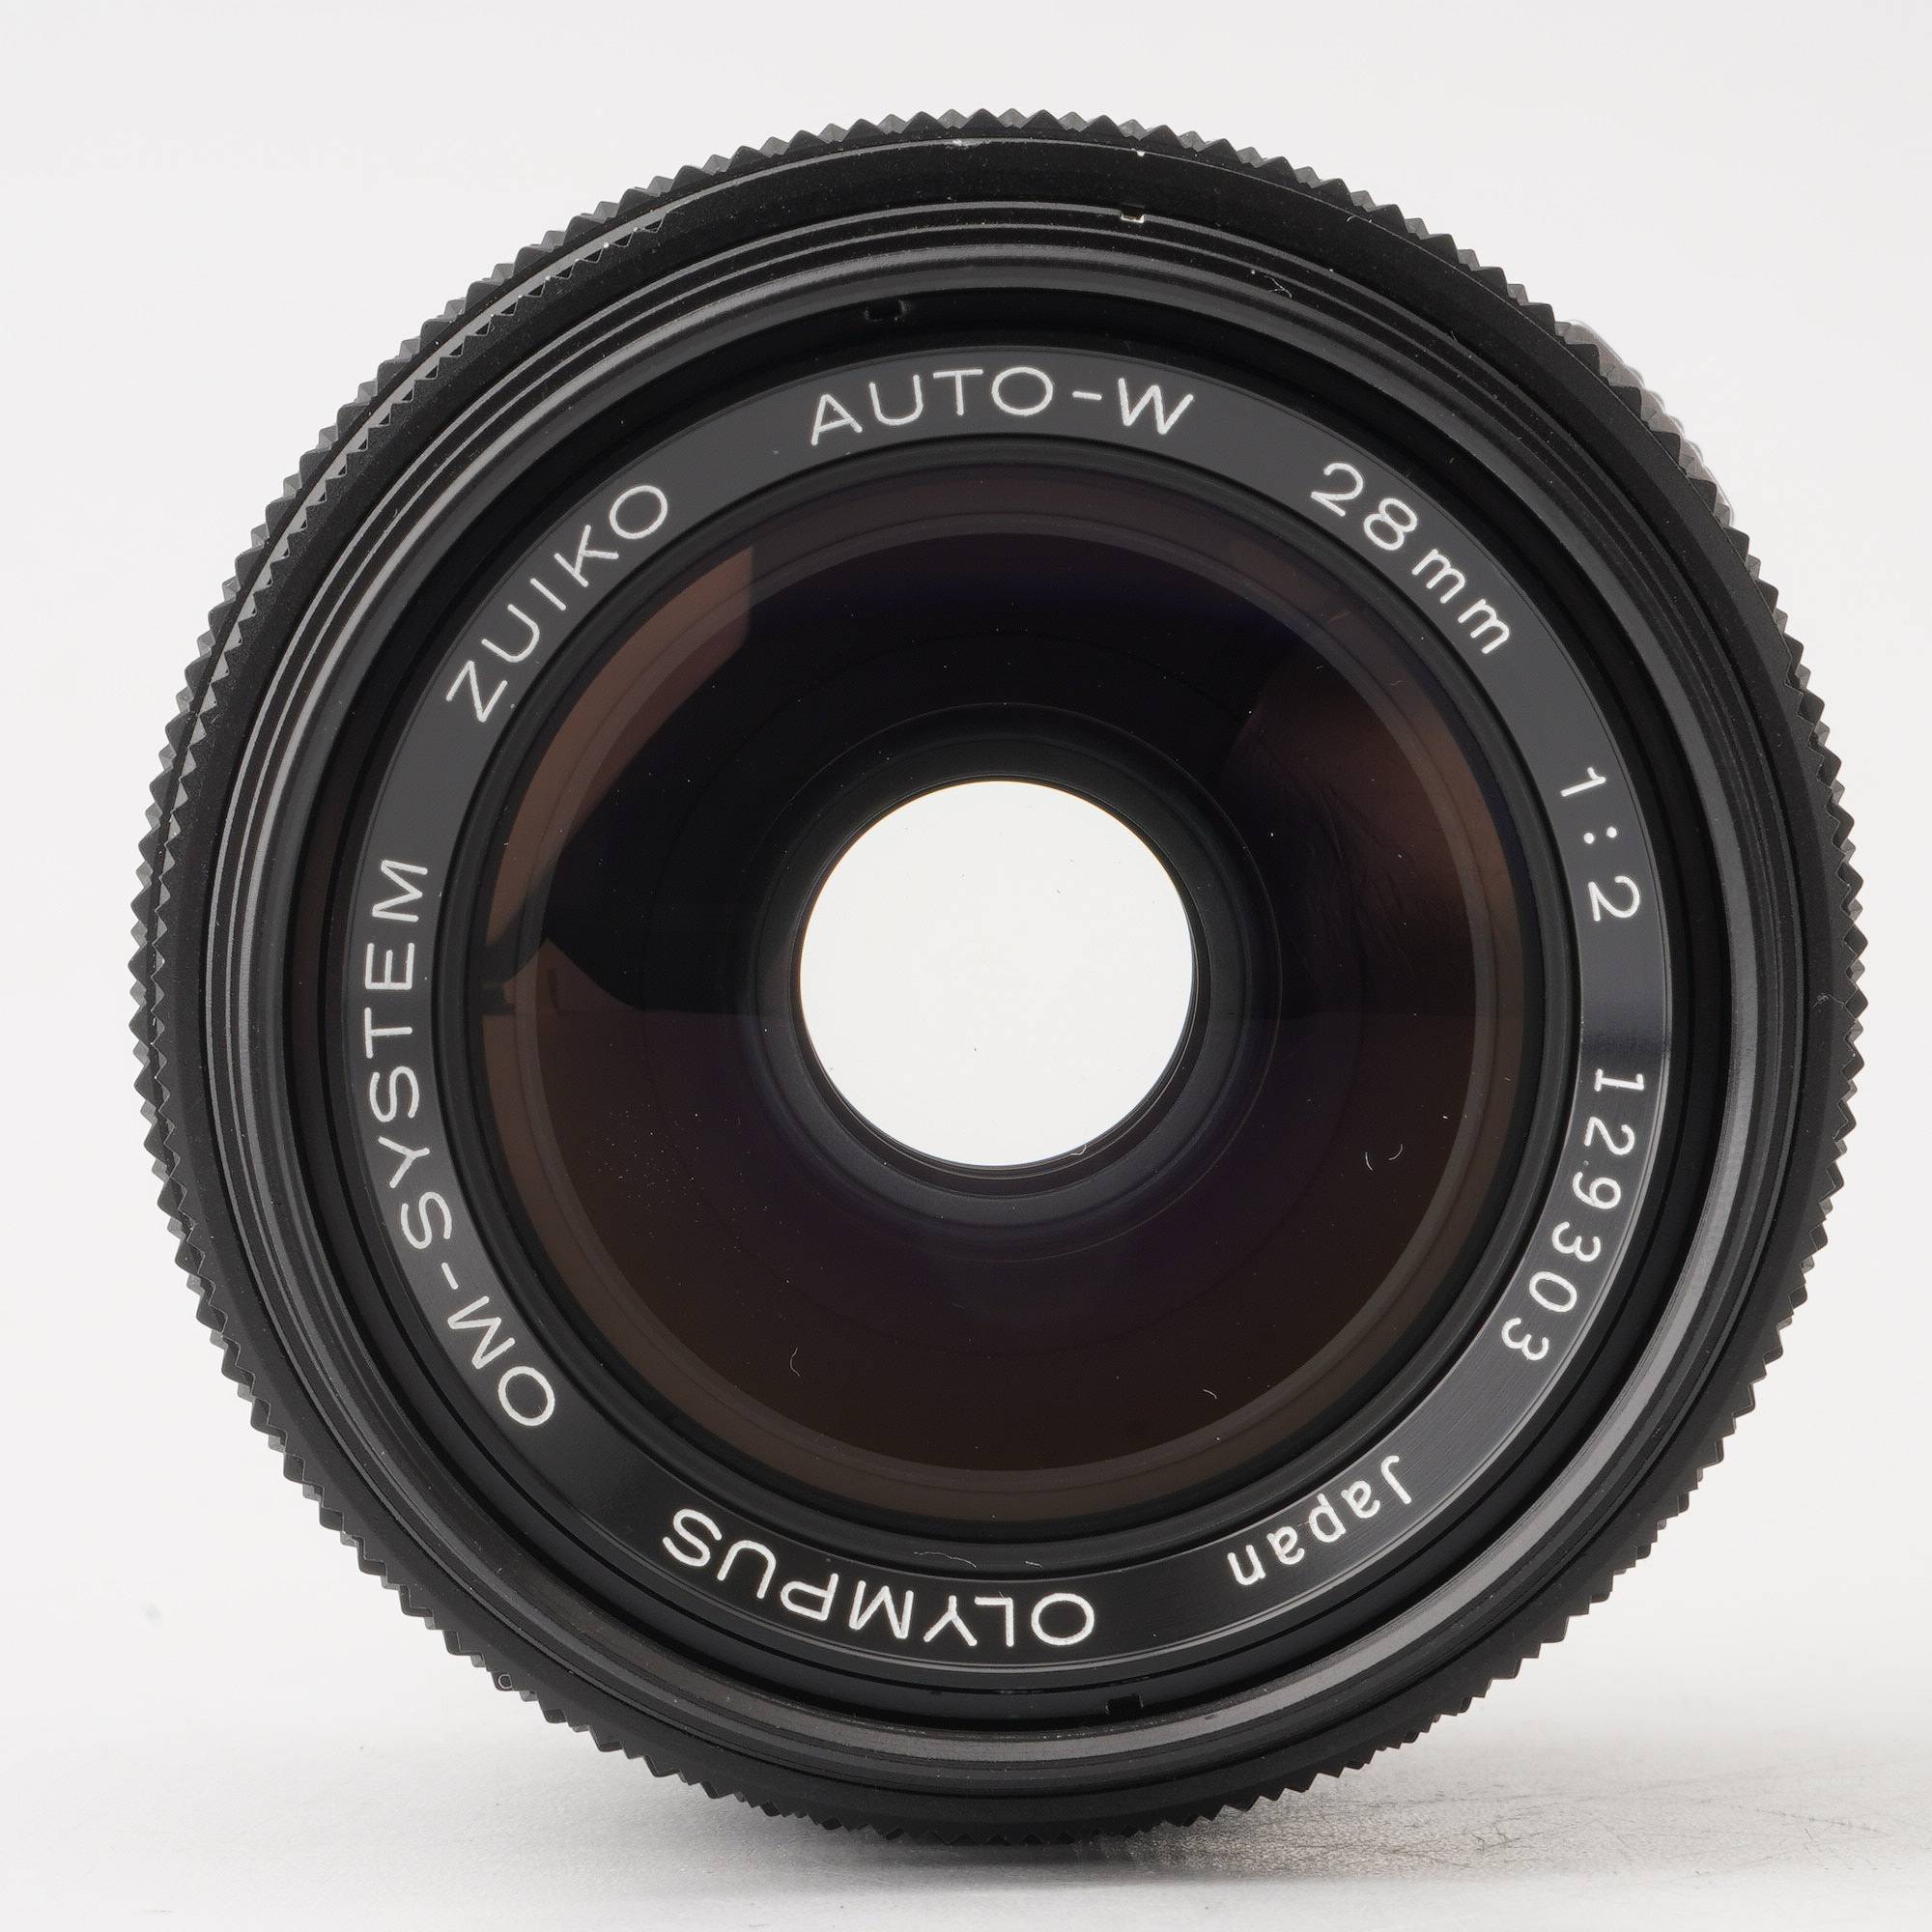 OLYMPUS OM-SYSTEM AUTO-W 28mm F2 カメラ レンズカメラ